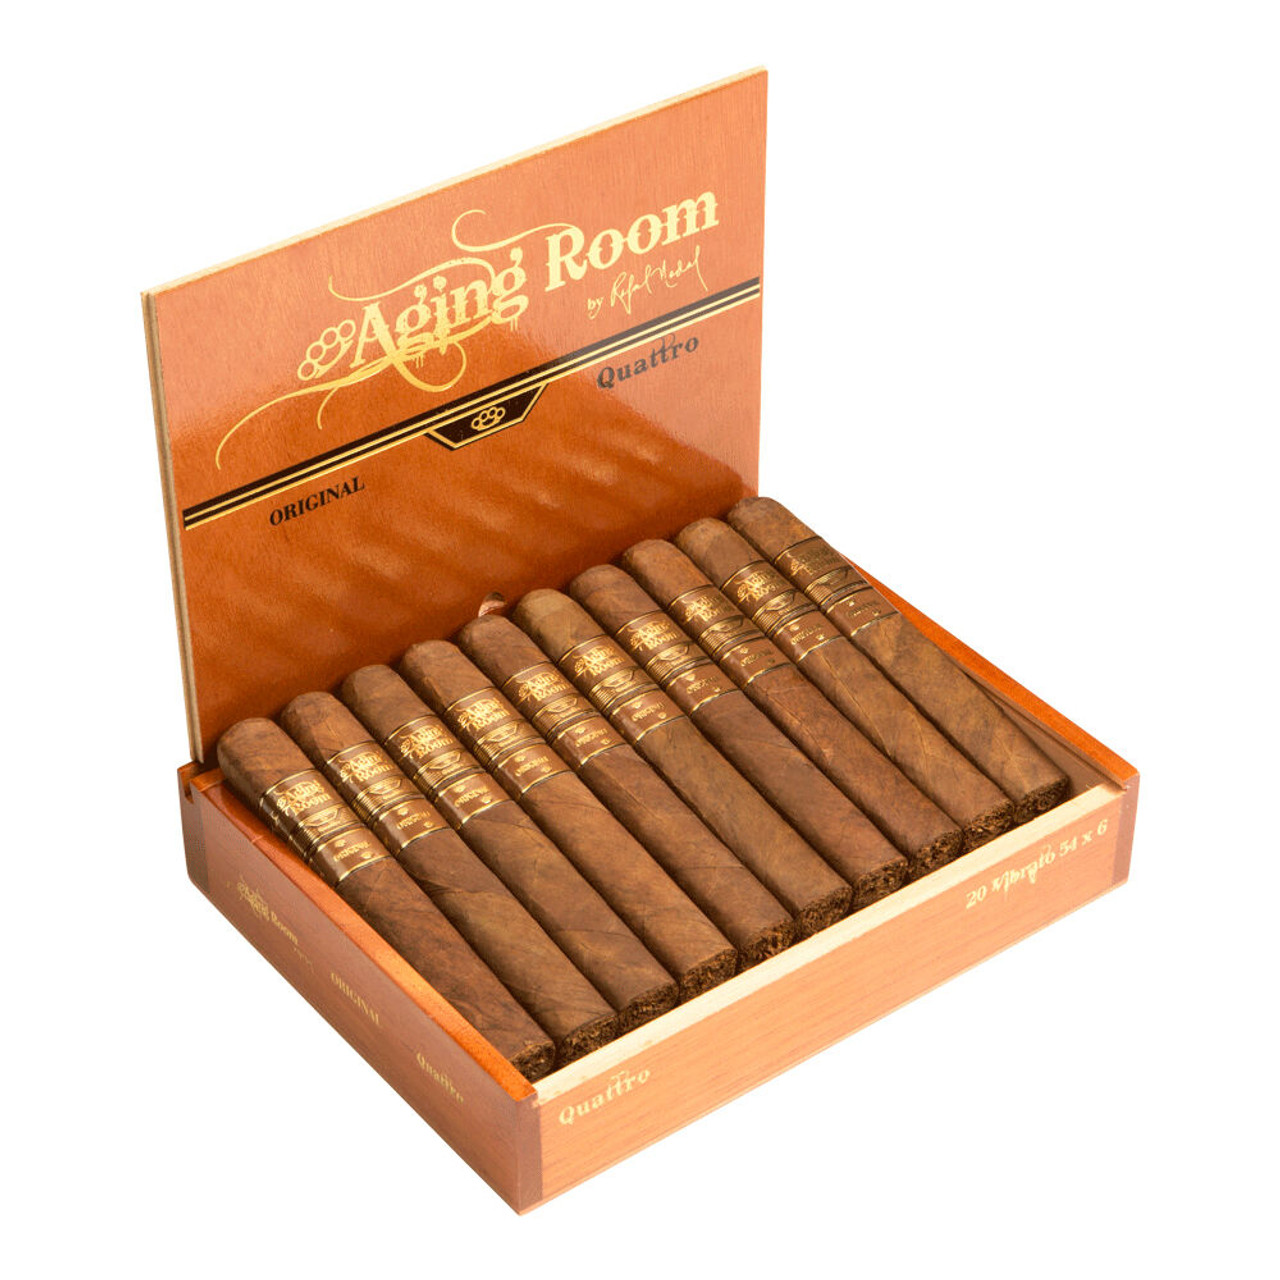 Aging Room Quattro Original Vibrato Cigars - 6 x 54 (Box of 20) Open